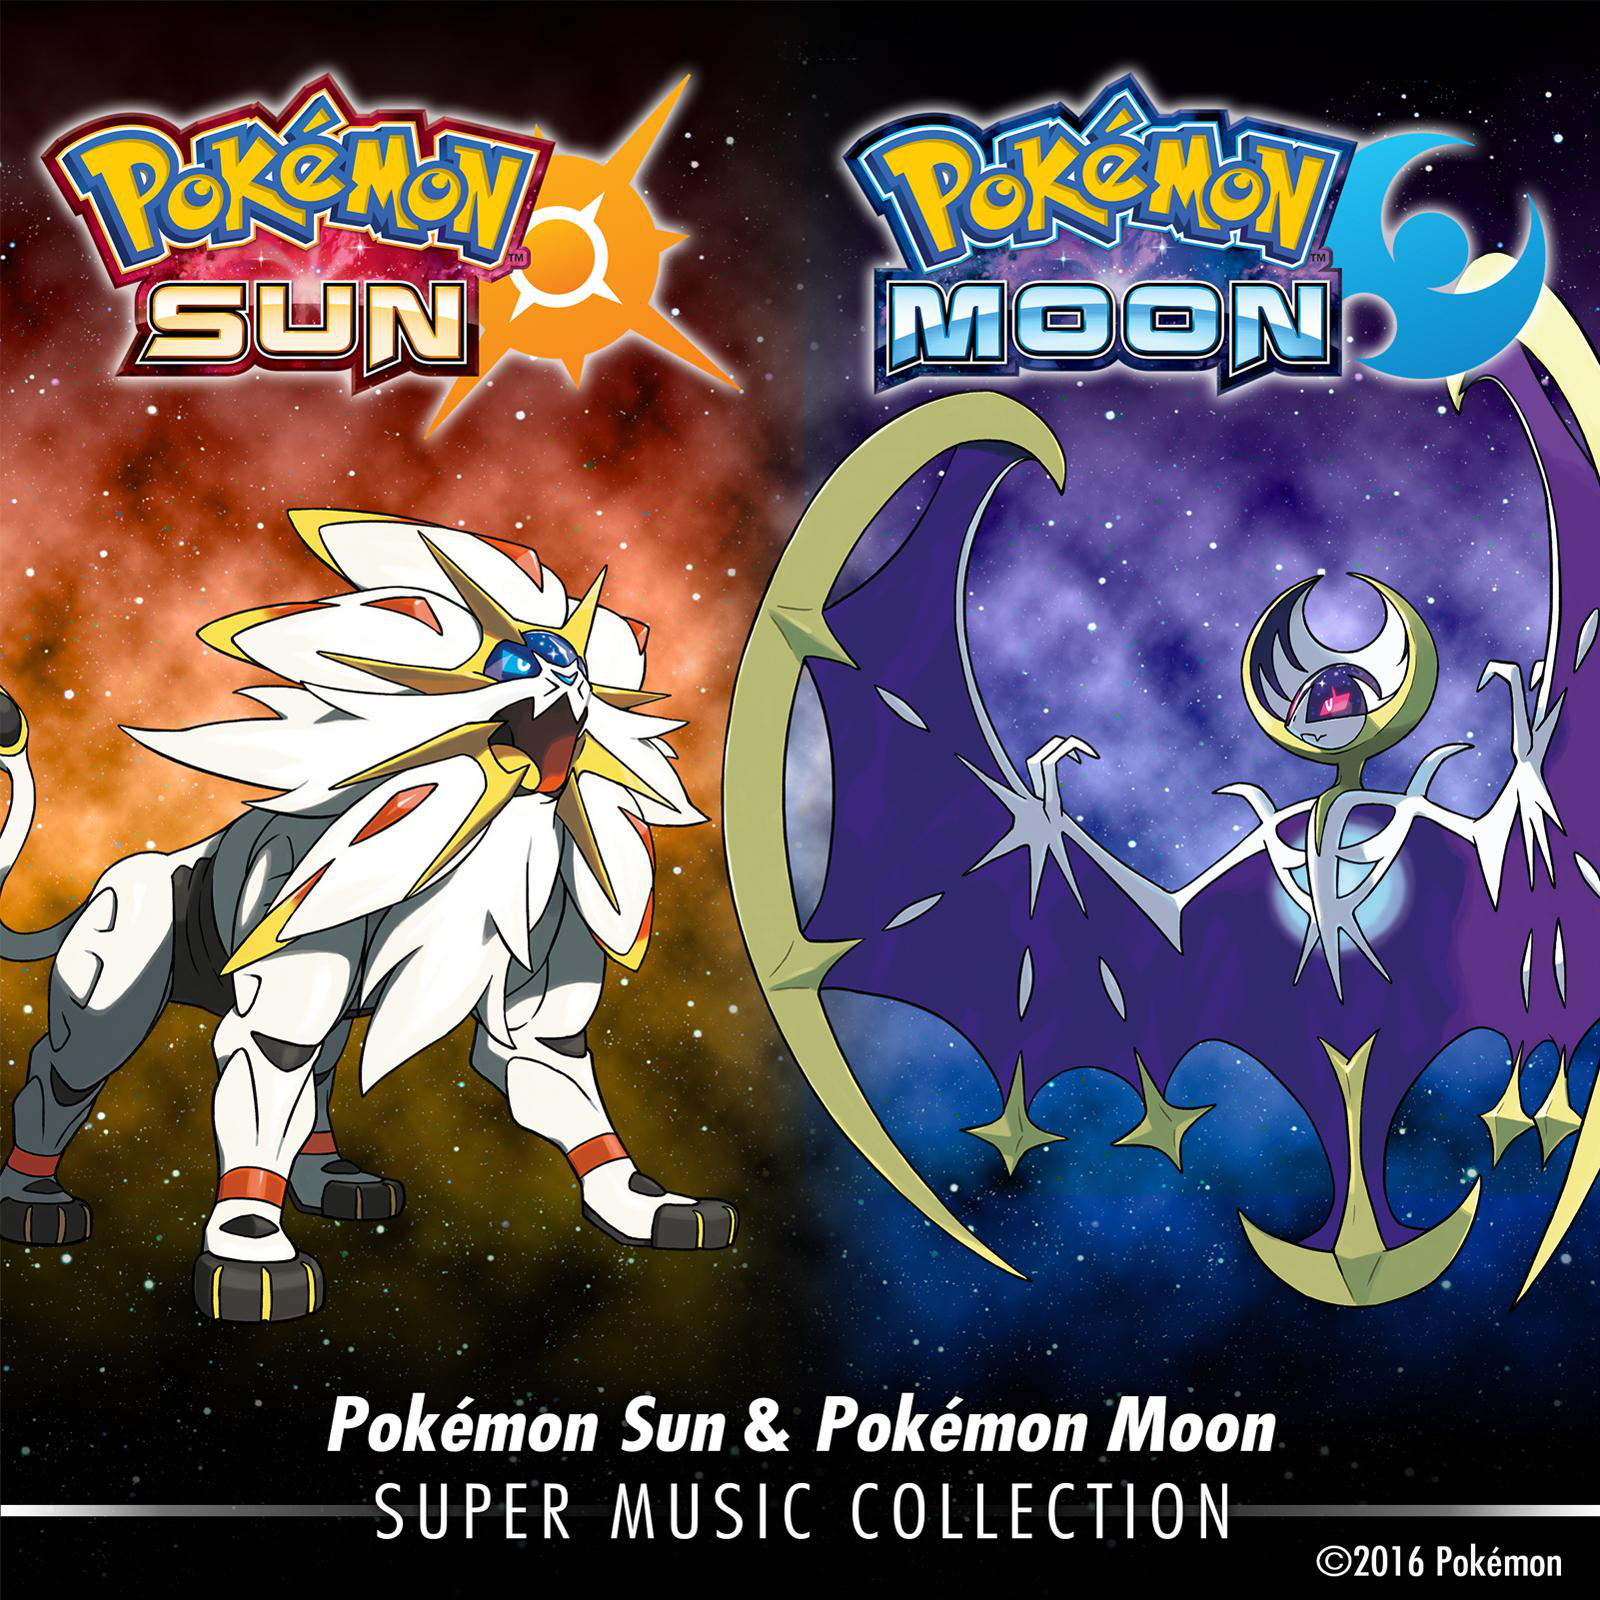 Stream Pokemon Sun & Moon, Solgaleo & Lunala Battle Music